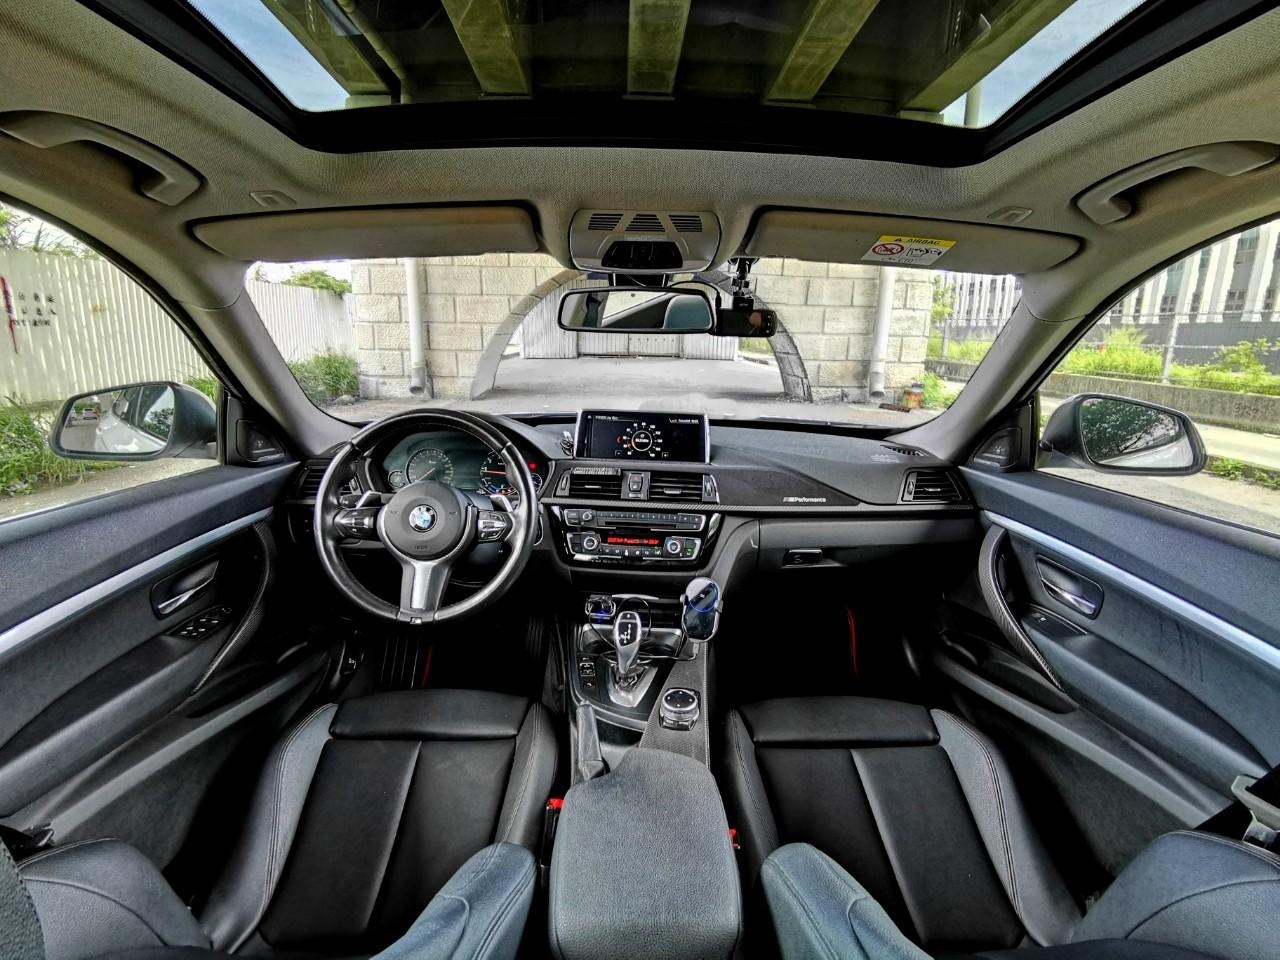 BMW 二手車買賣-2015 BMW 3-Series GT 320i Sport-22.8萬公里-SUM認證車庫